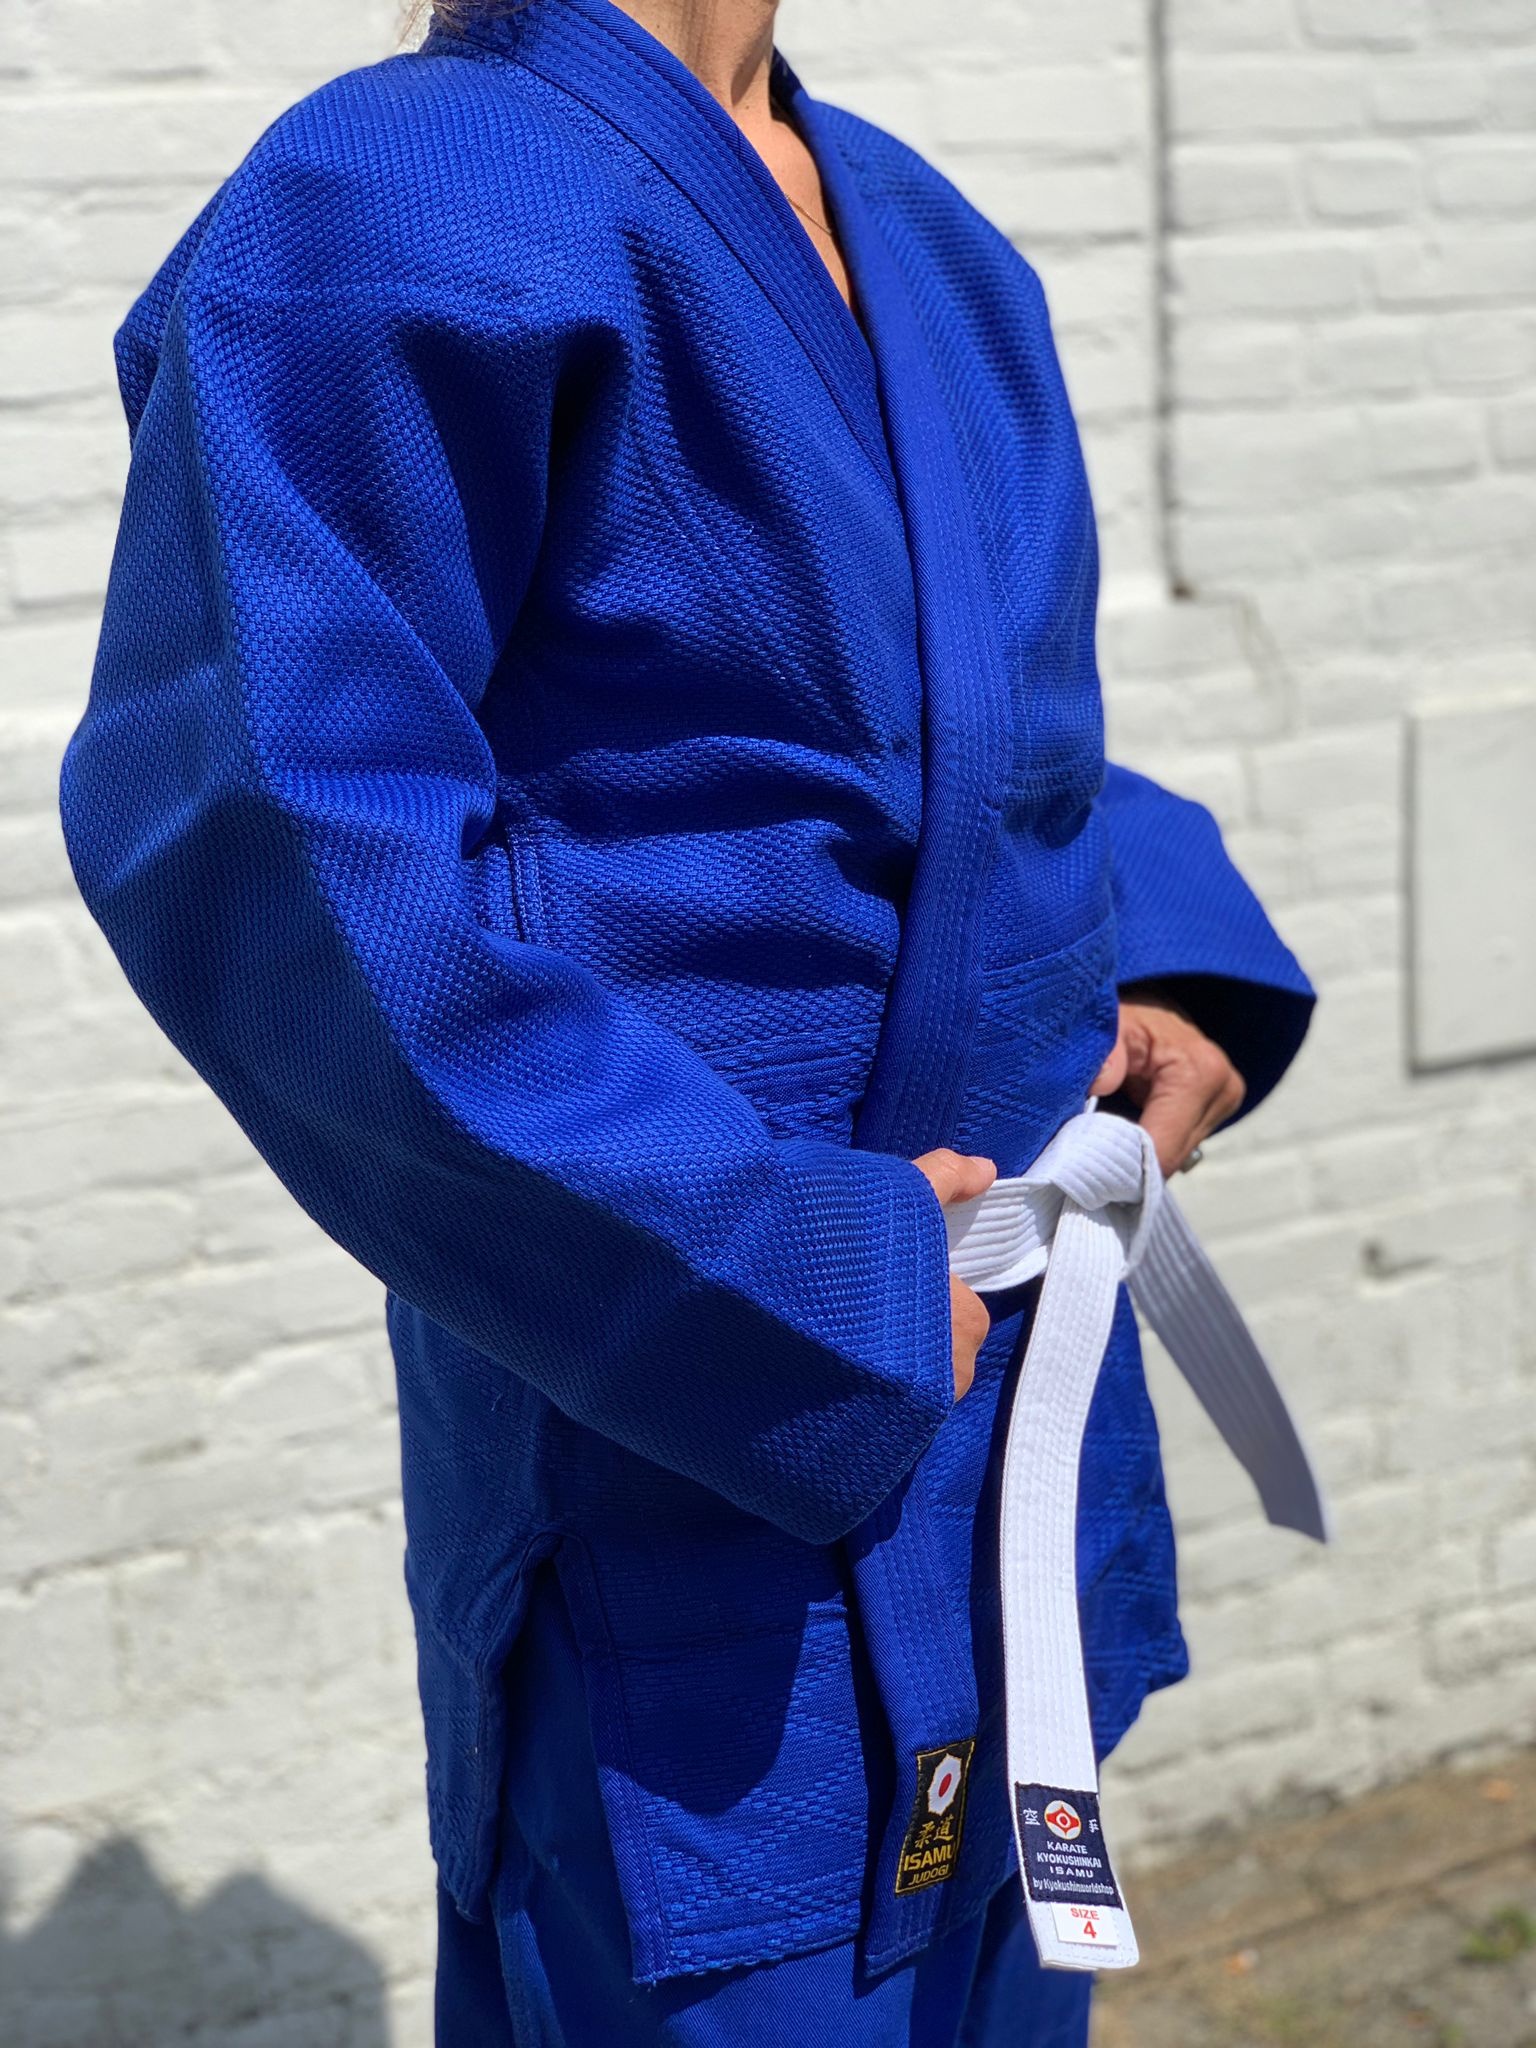 adidas | Club Judo Uniform for Men, Women & Kids | Perfect for Training |  Durable Polycotton Judo Uniform with White Belt Included, 350g/13oz…  (110cm) : Amazon.co.uk: Fashion